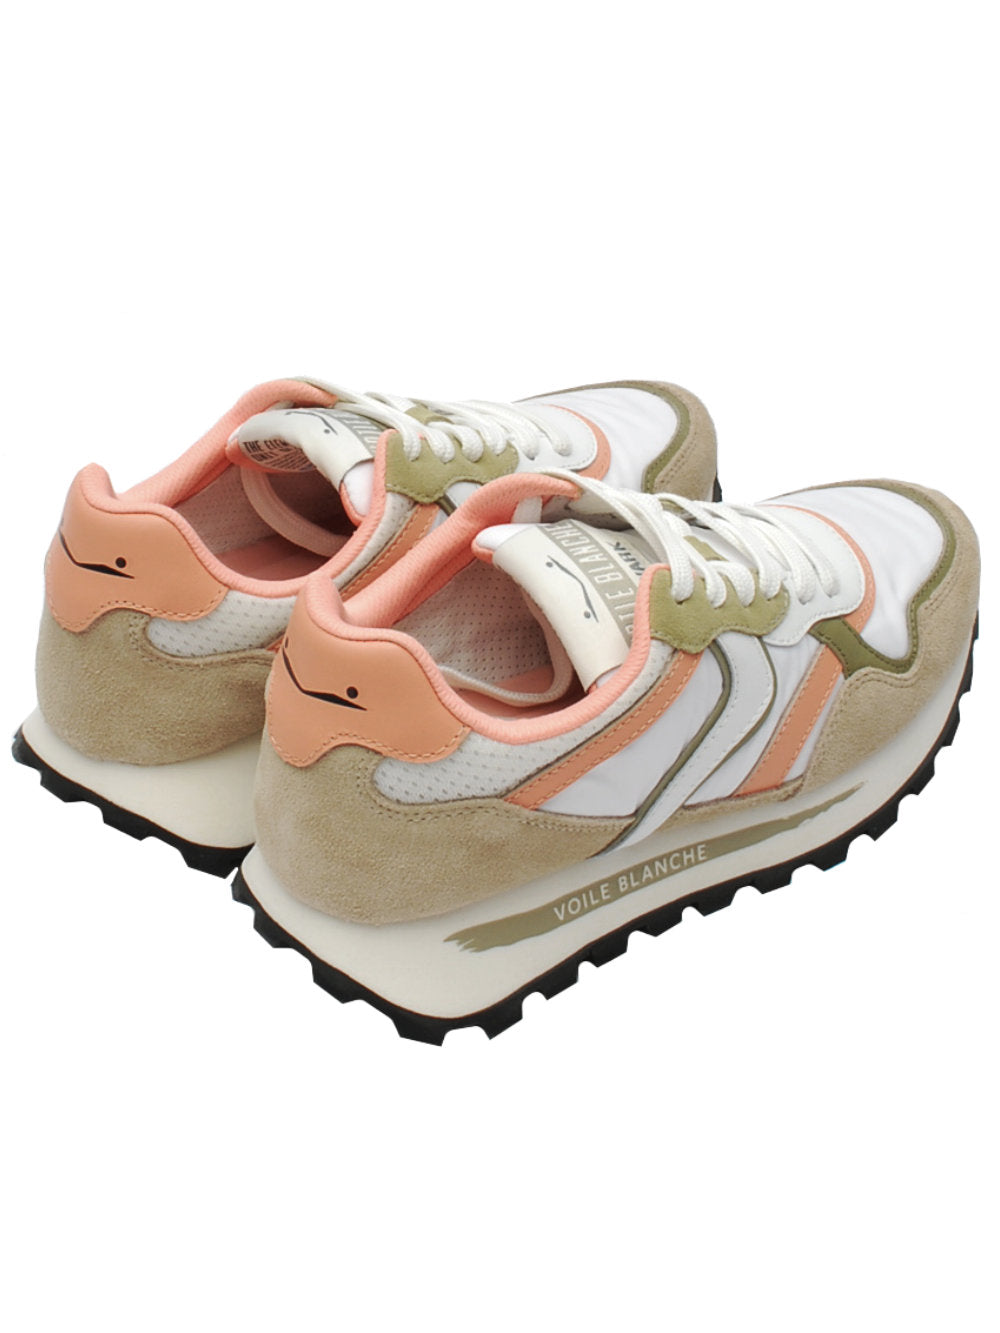 Voile Blanche sneaker qwark 8315 beige bianco rosa pe24